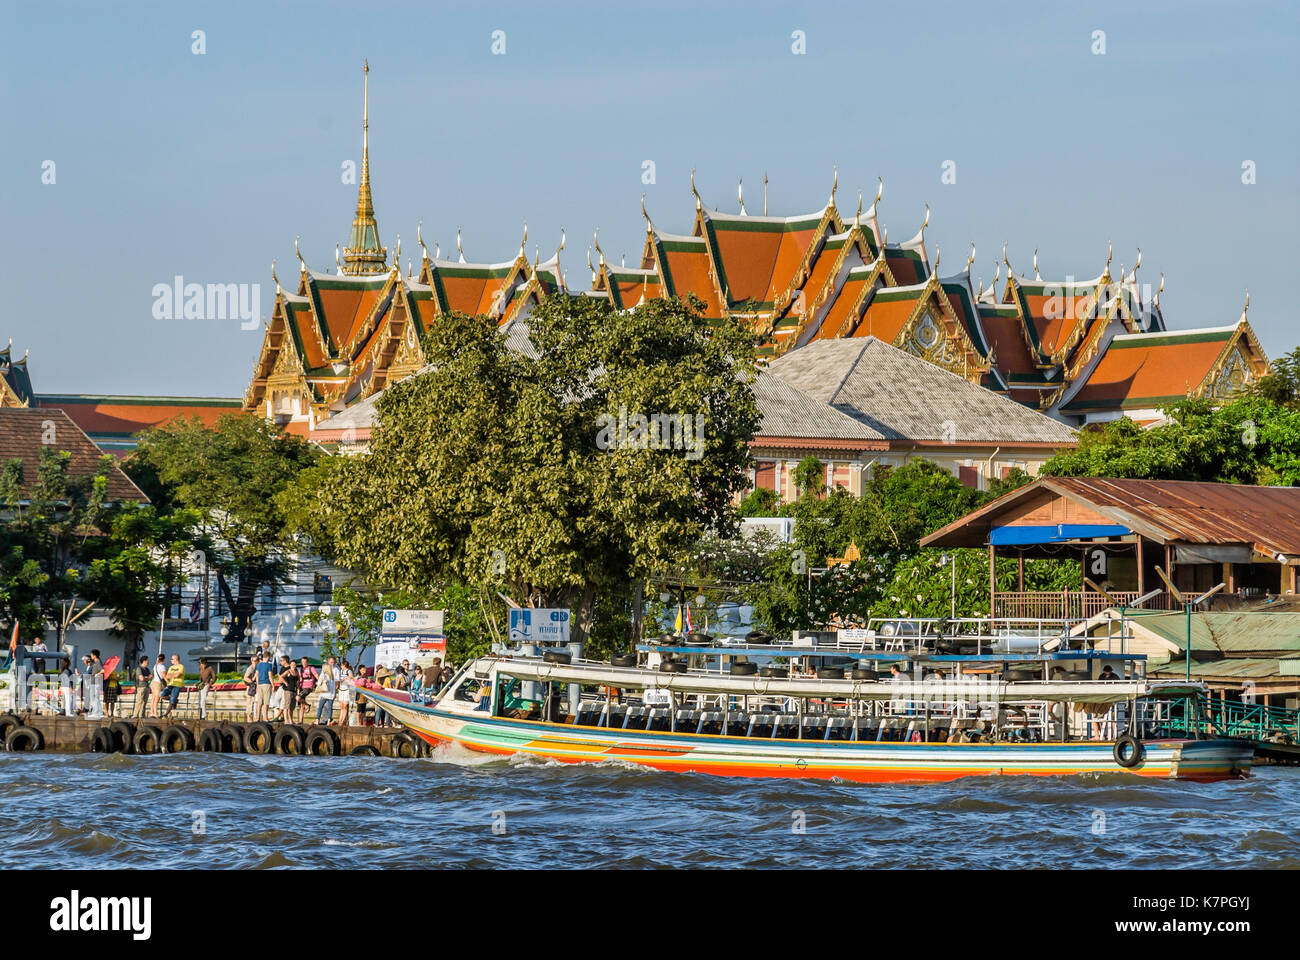 Speed Boat at the Chao Phraya River, Bangkok, Thailand Stock Photo